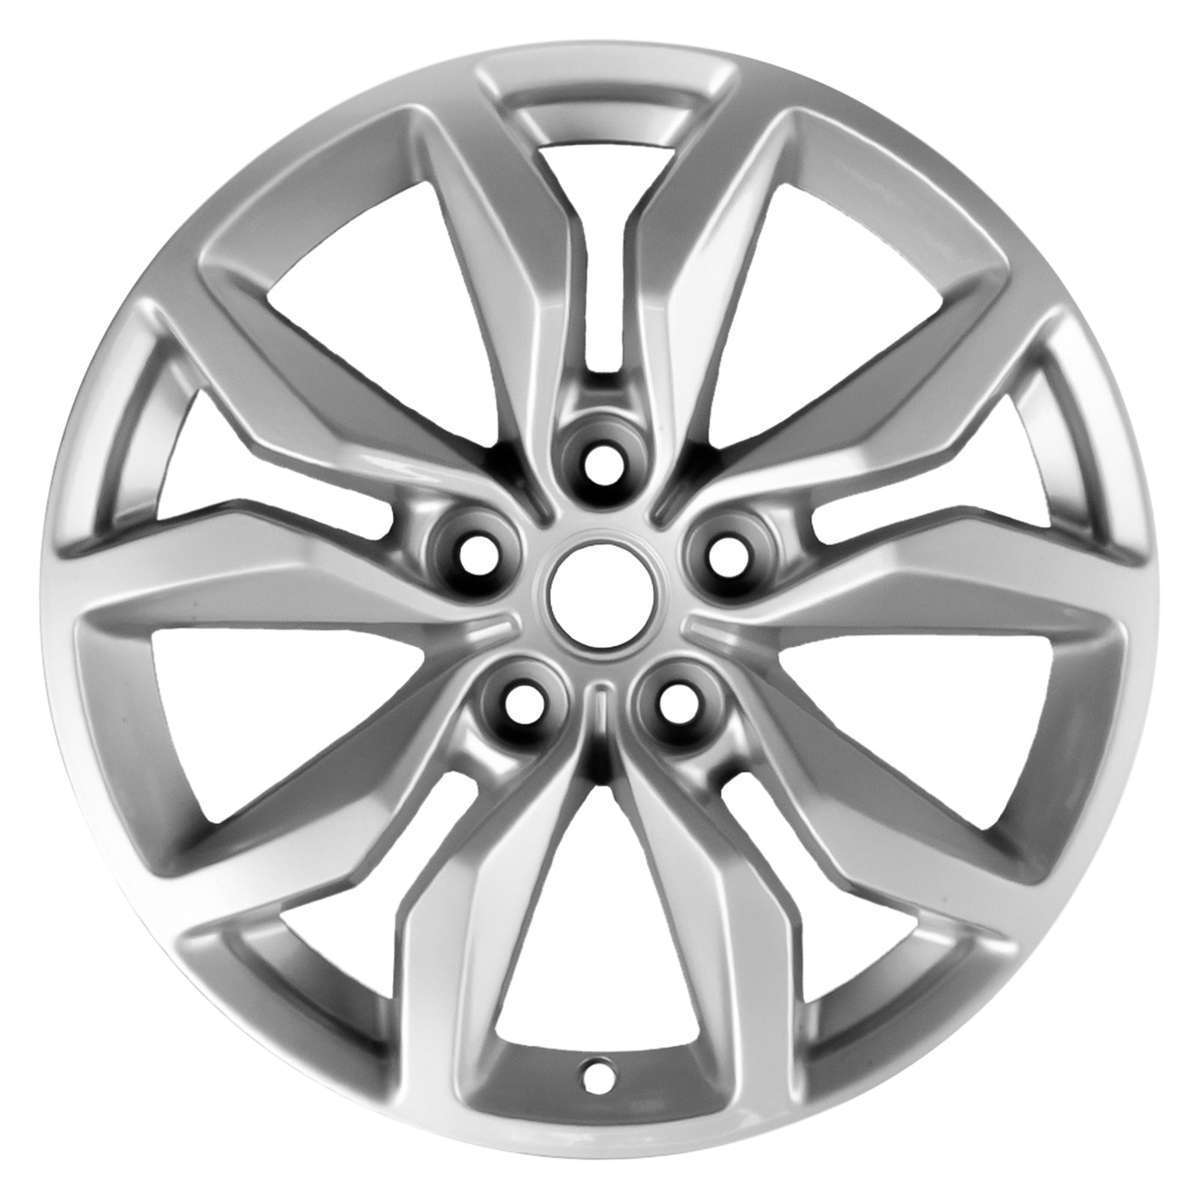 2019 Chevrolet Impala New 18" Replacement Wheel Rim RW5712S